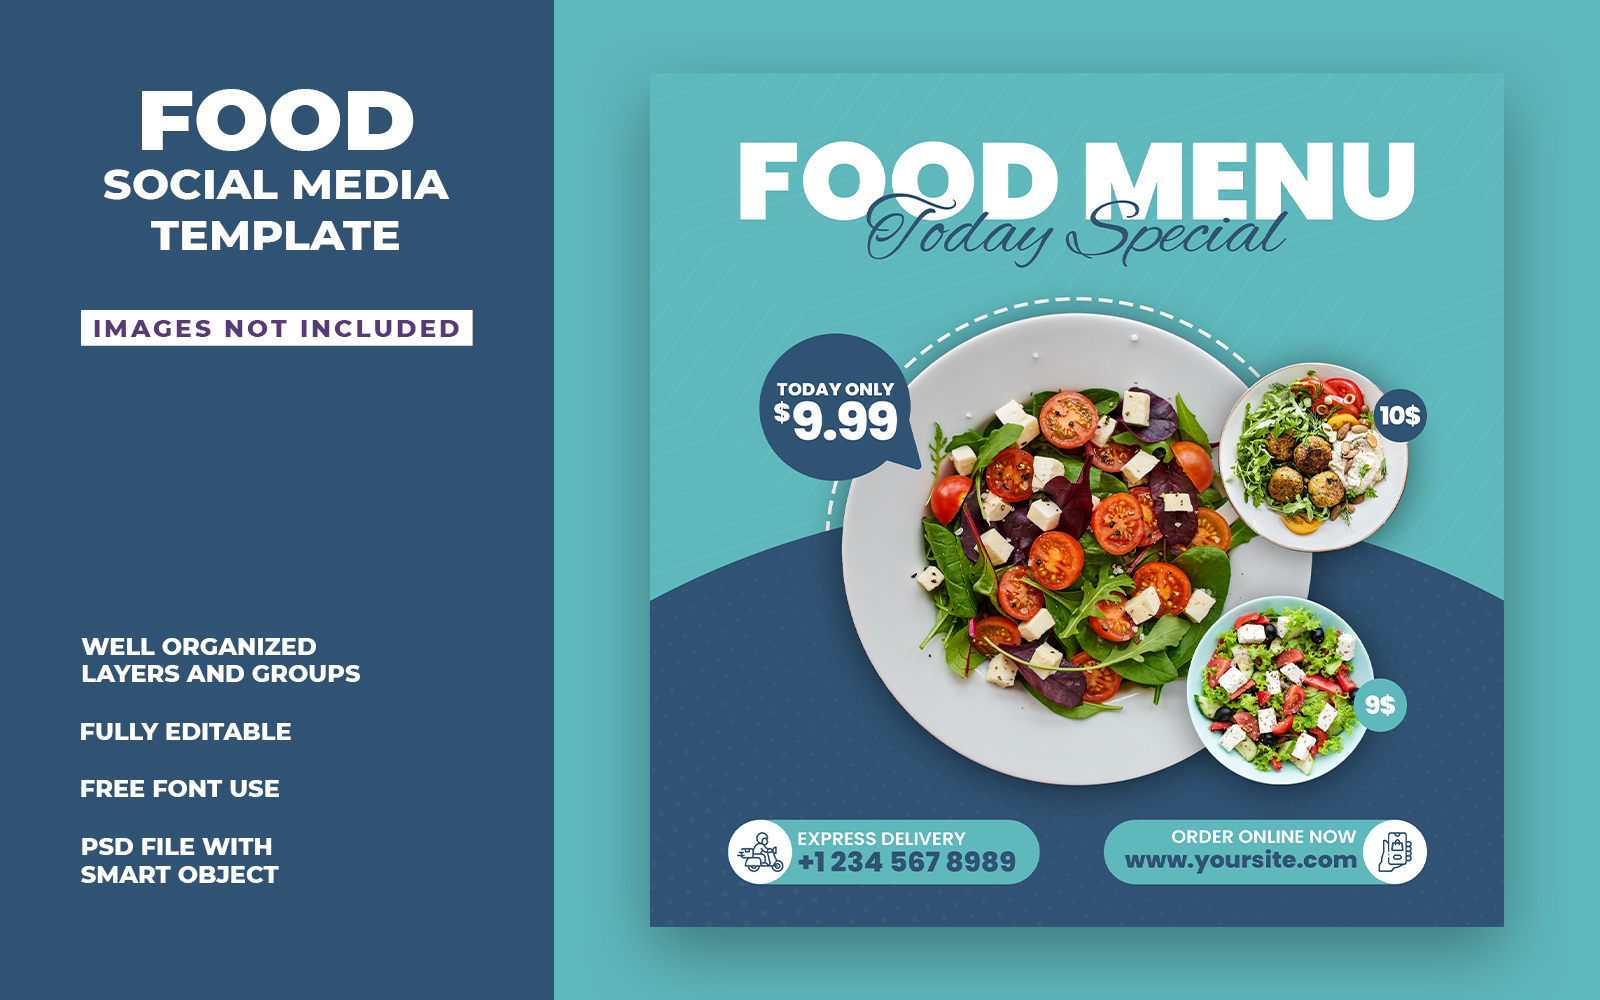 Food - Social Media Templates